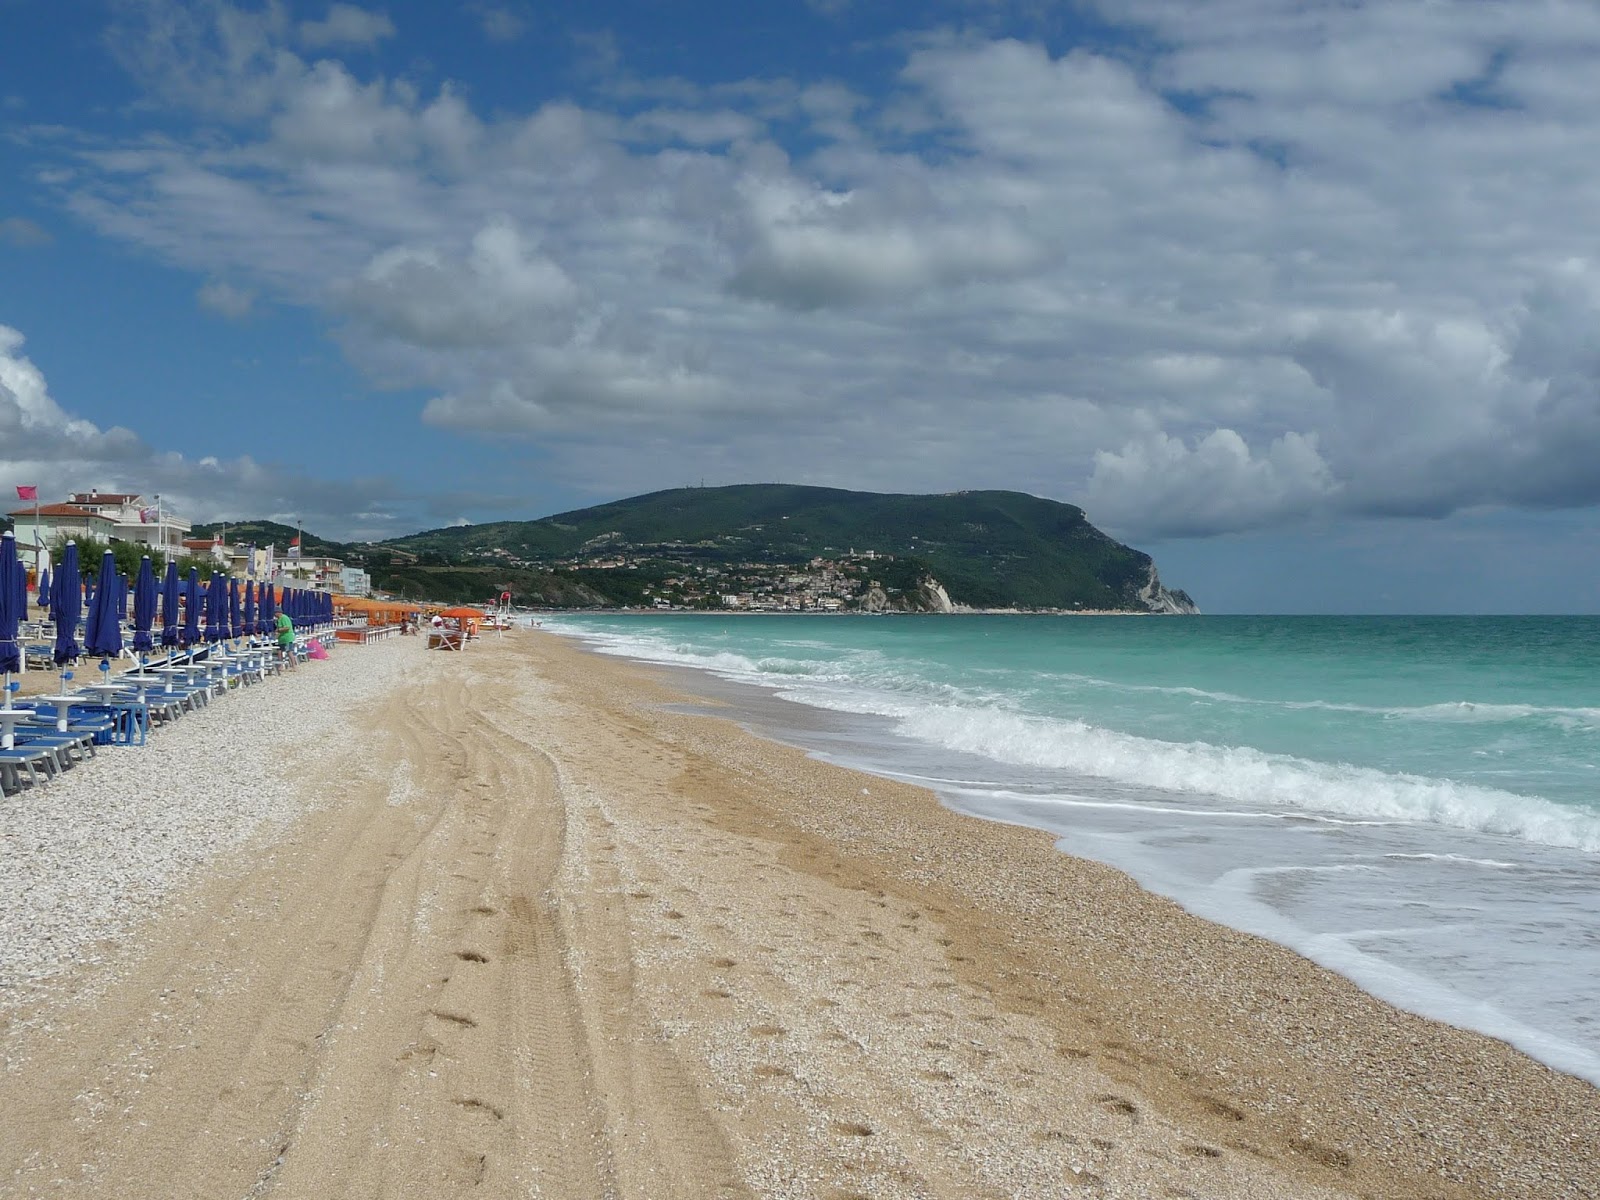 Spiaggia Libera Marcelli'in fotoğrafı geniş plaj ile birlikte